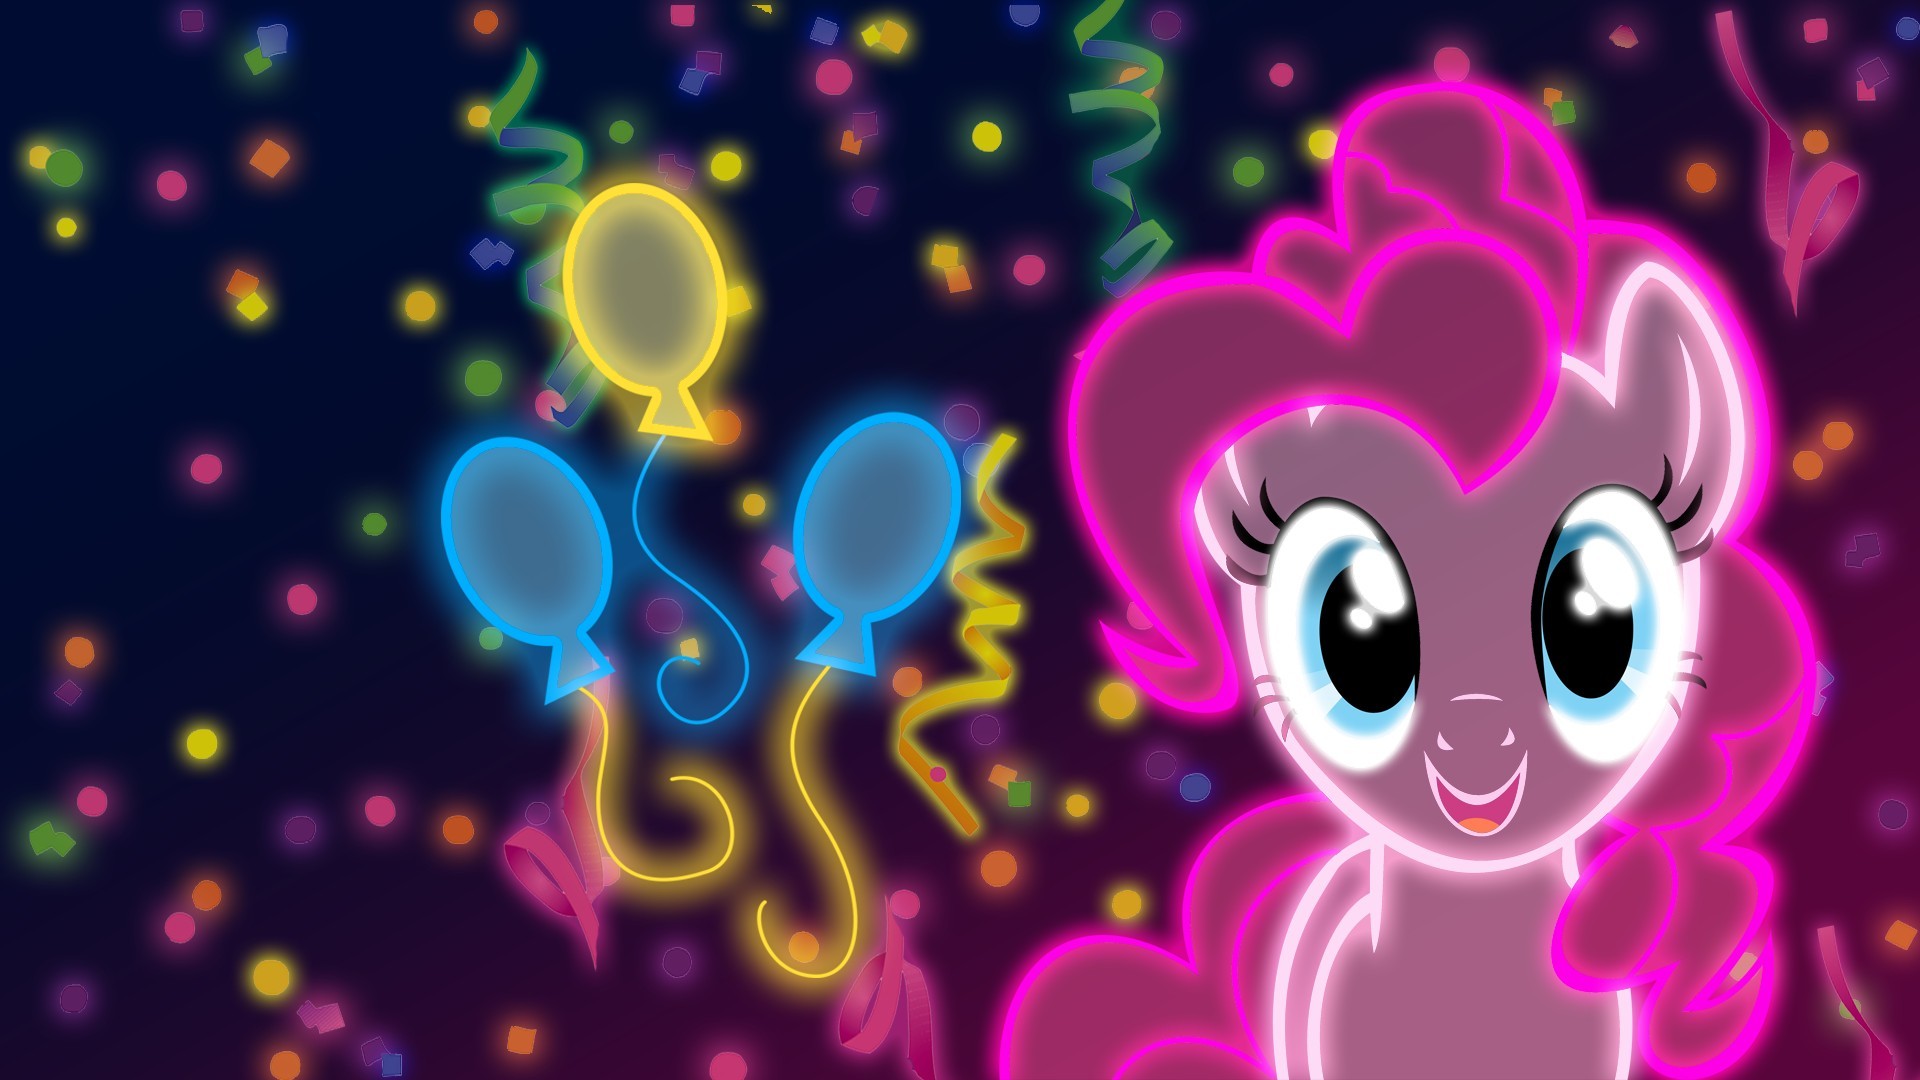 1920x1080 My little pony: friendship is magic neon wallpaper